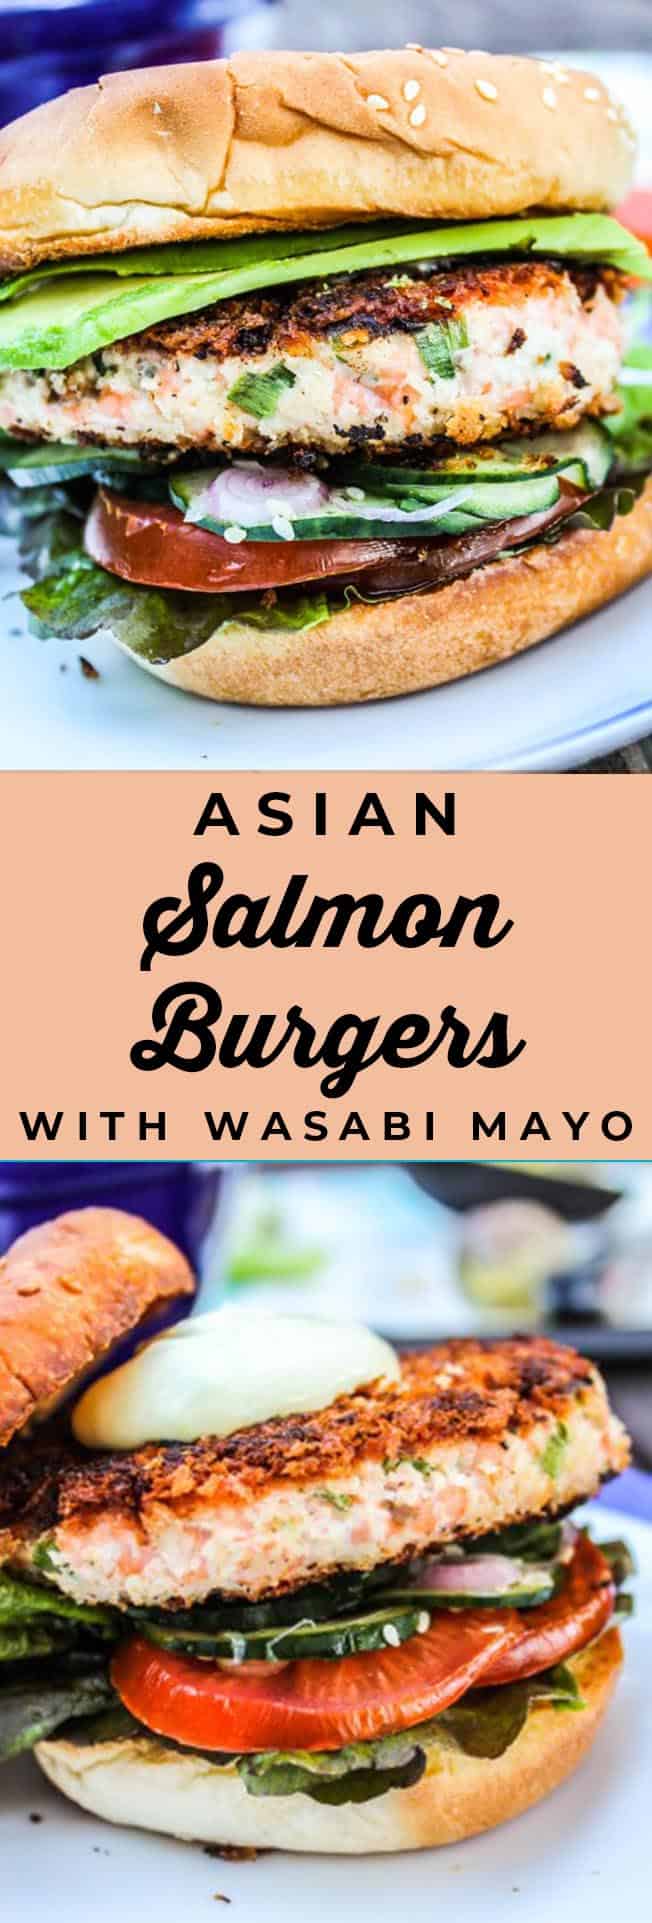 Asian Salmon Burgers